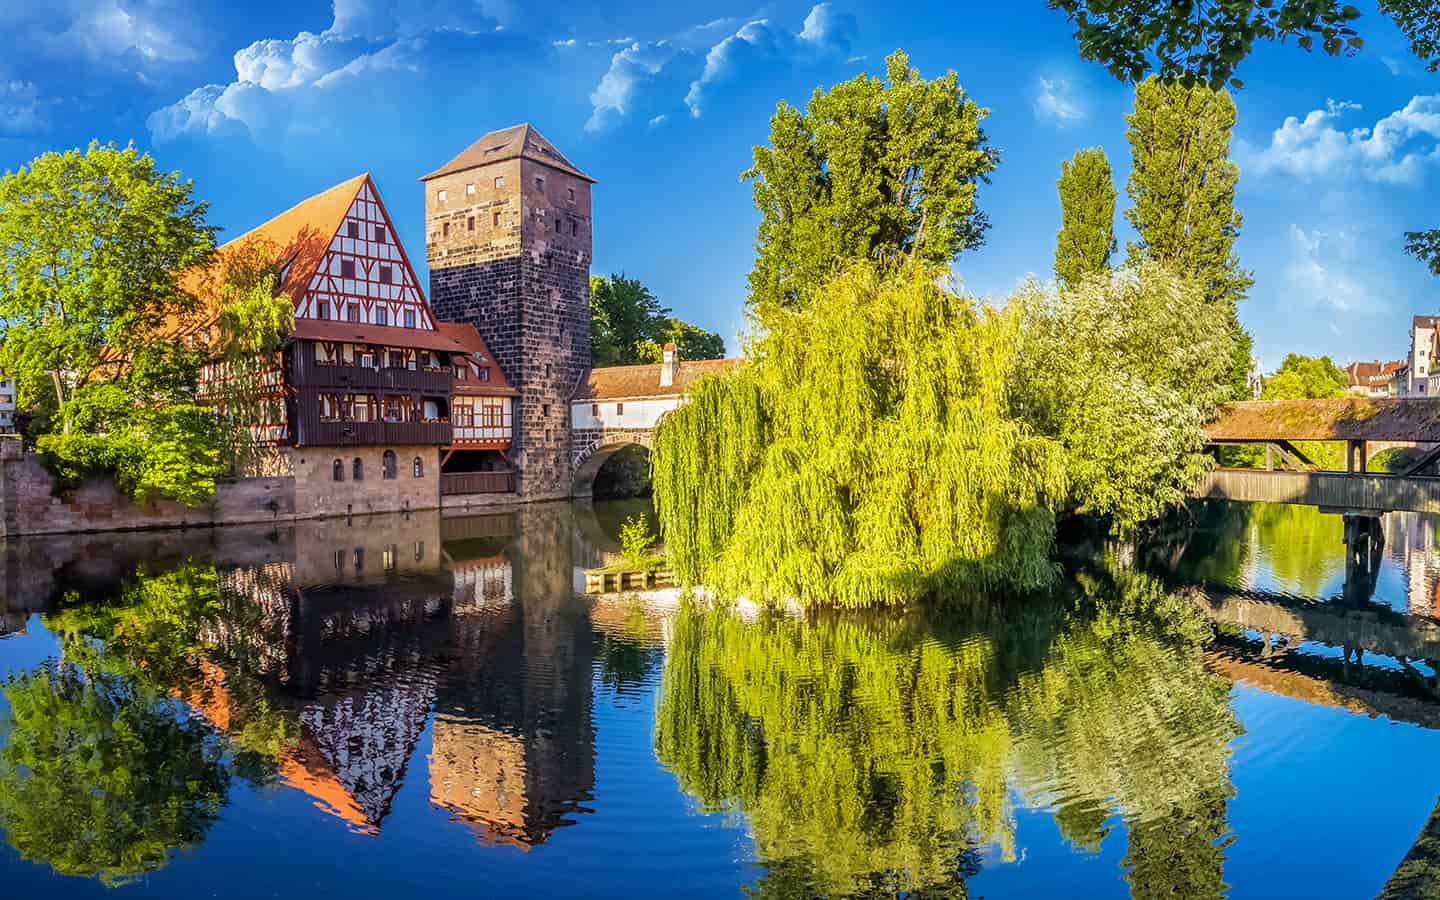 Altstadt in Nürnberg am Wasser bei strahlend blauem Himmel, Franken